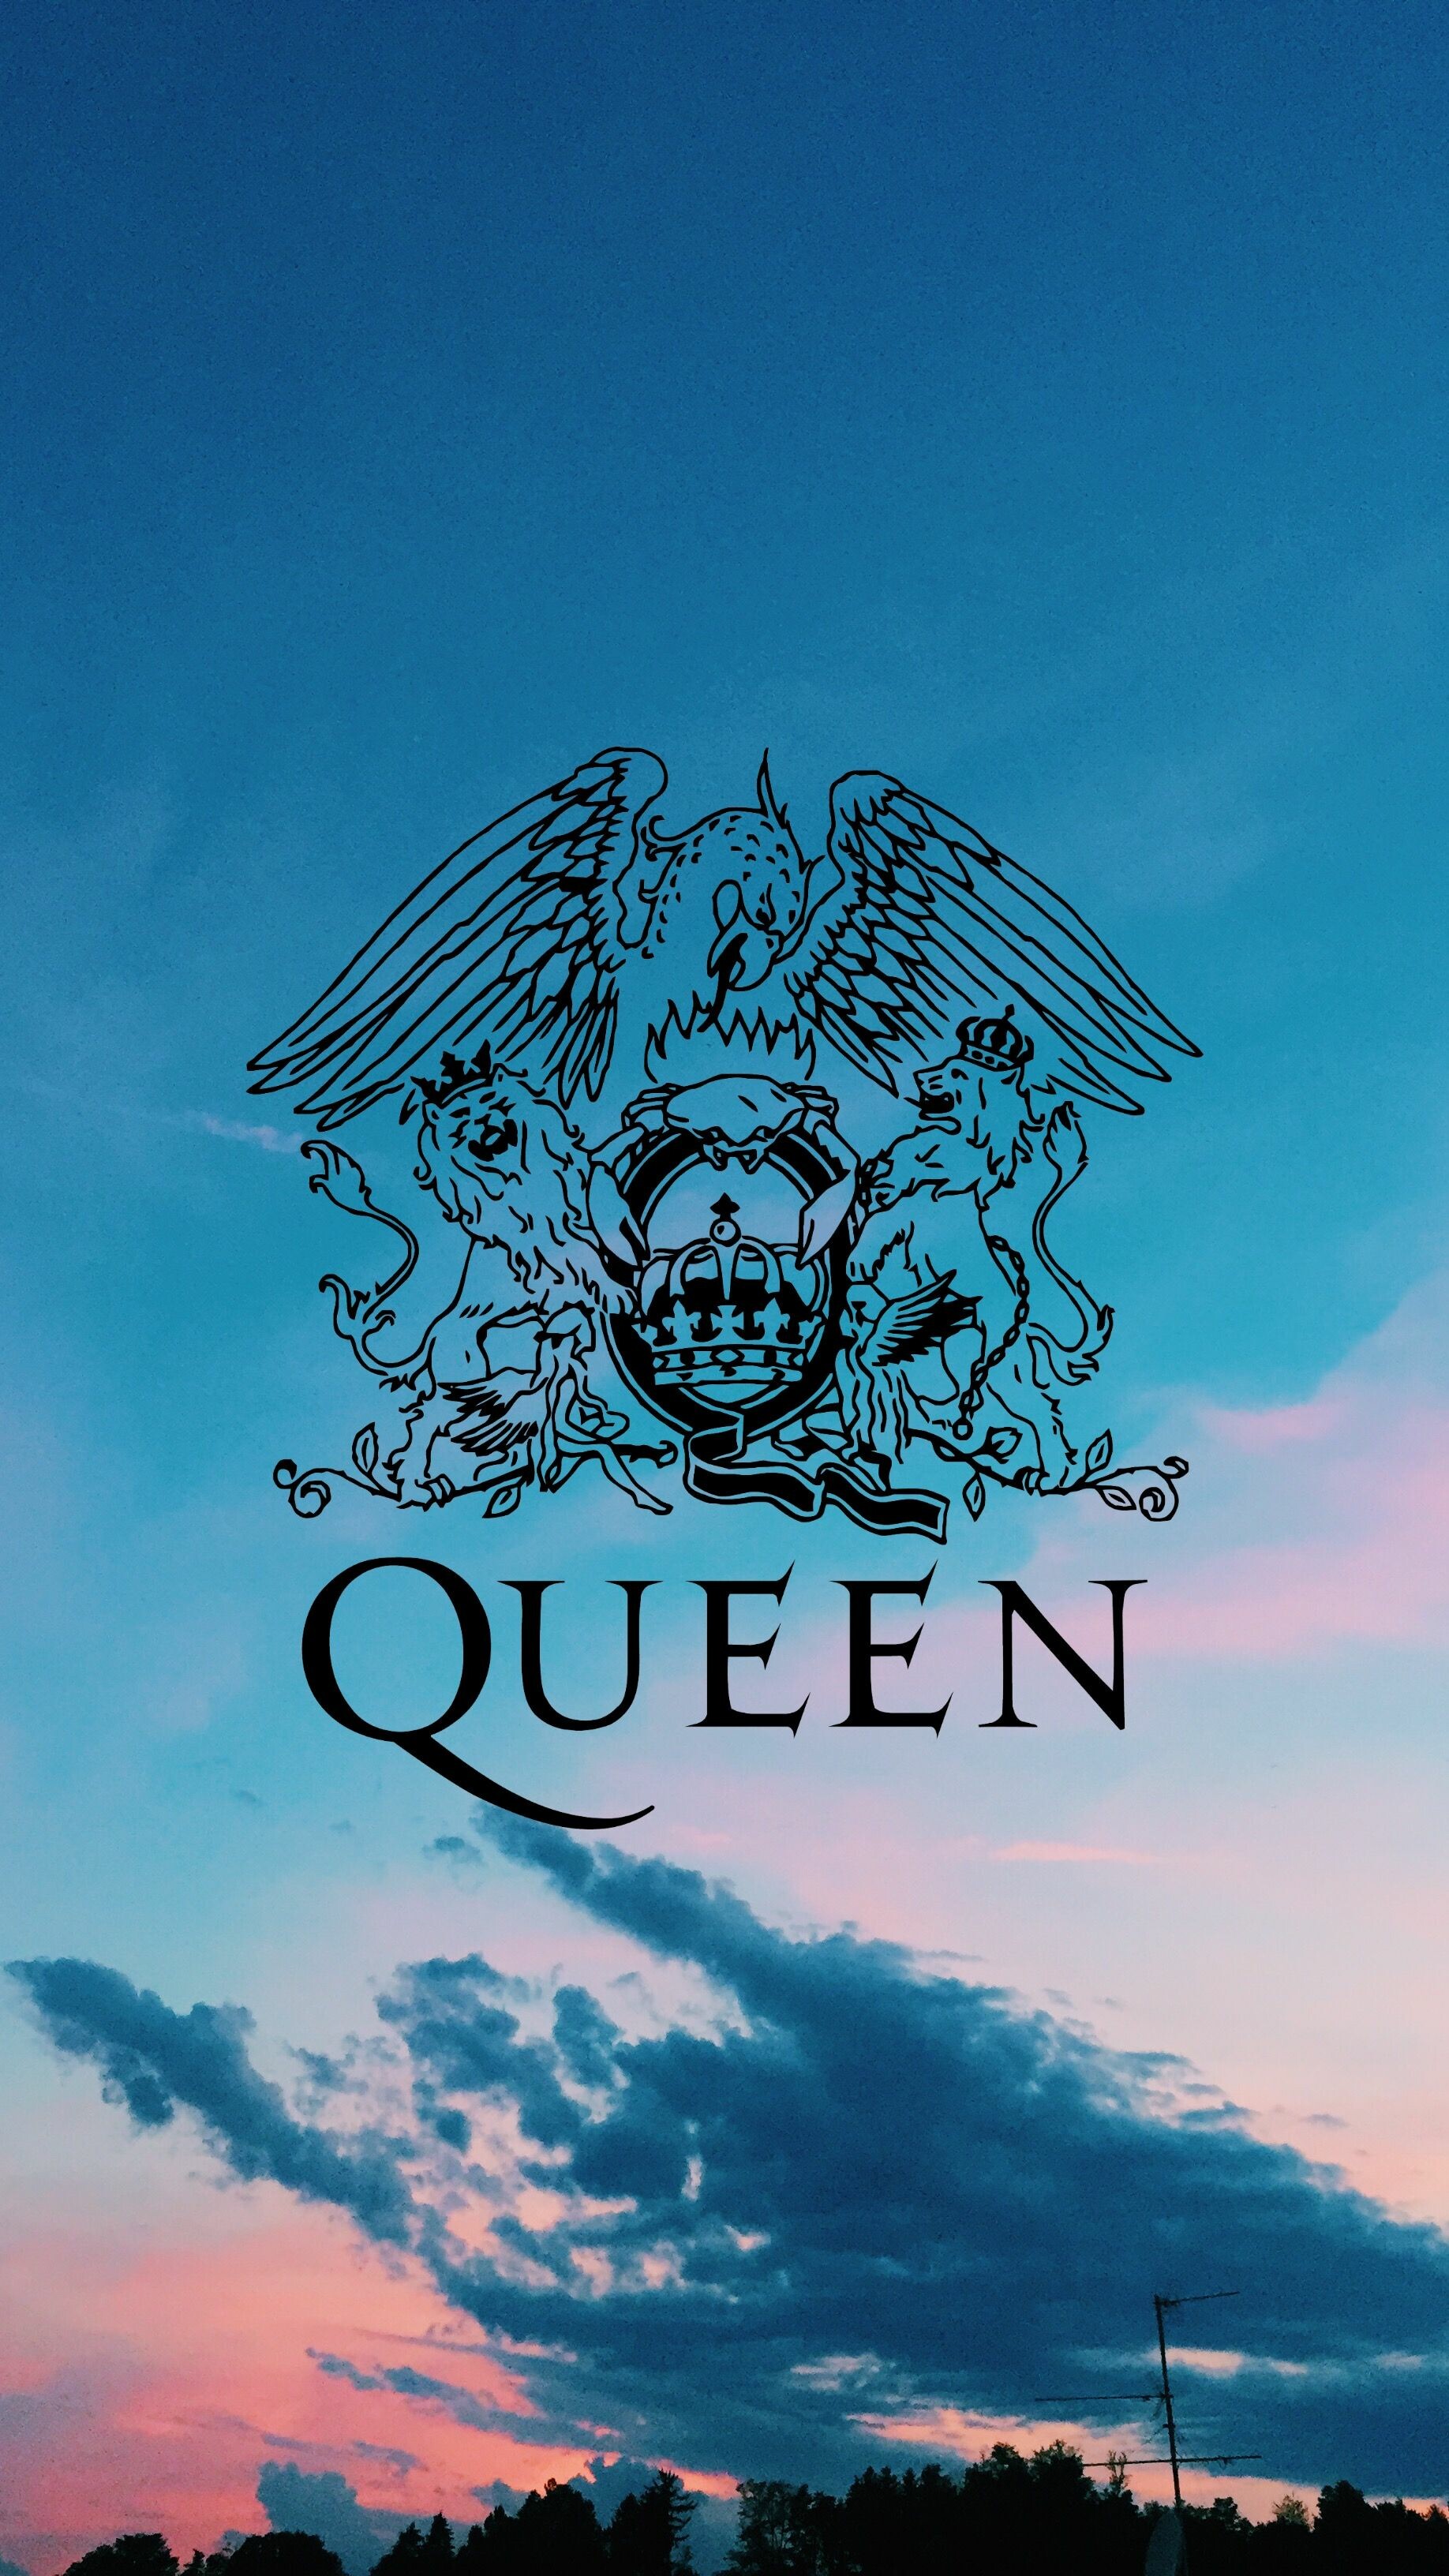 130 Queen Wallpaper ideas | queens wallpaper, queen, queen band-hancorp34.com.vn